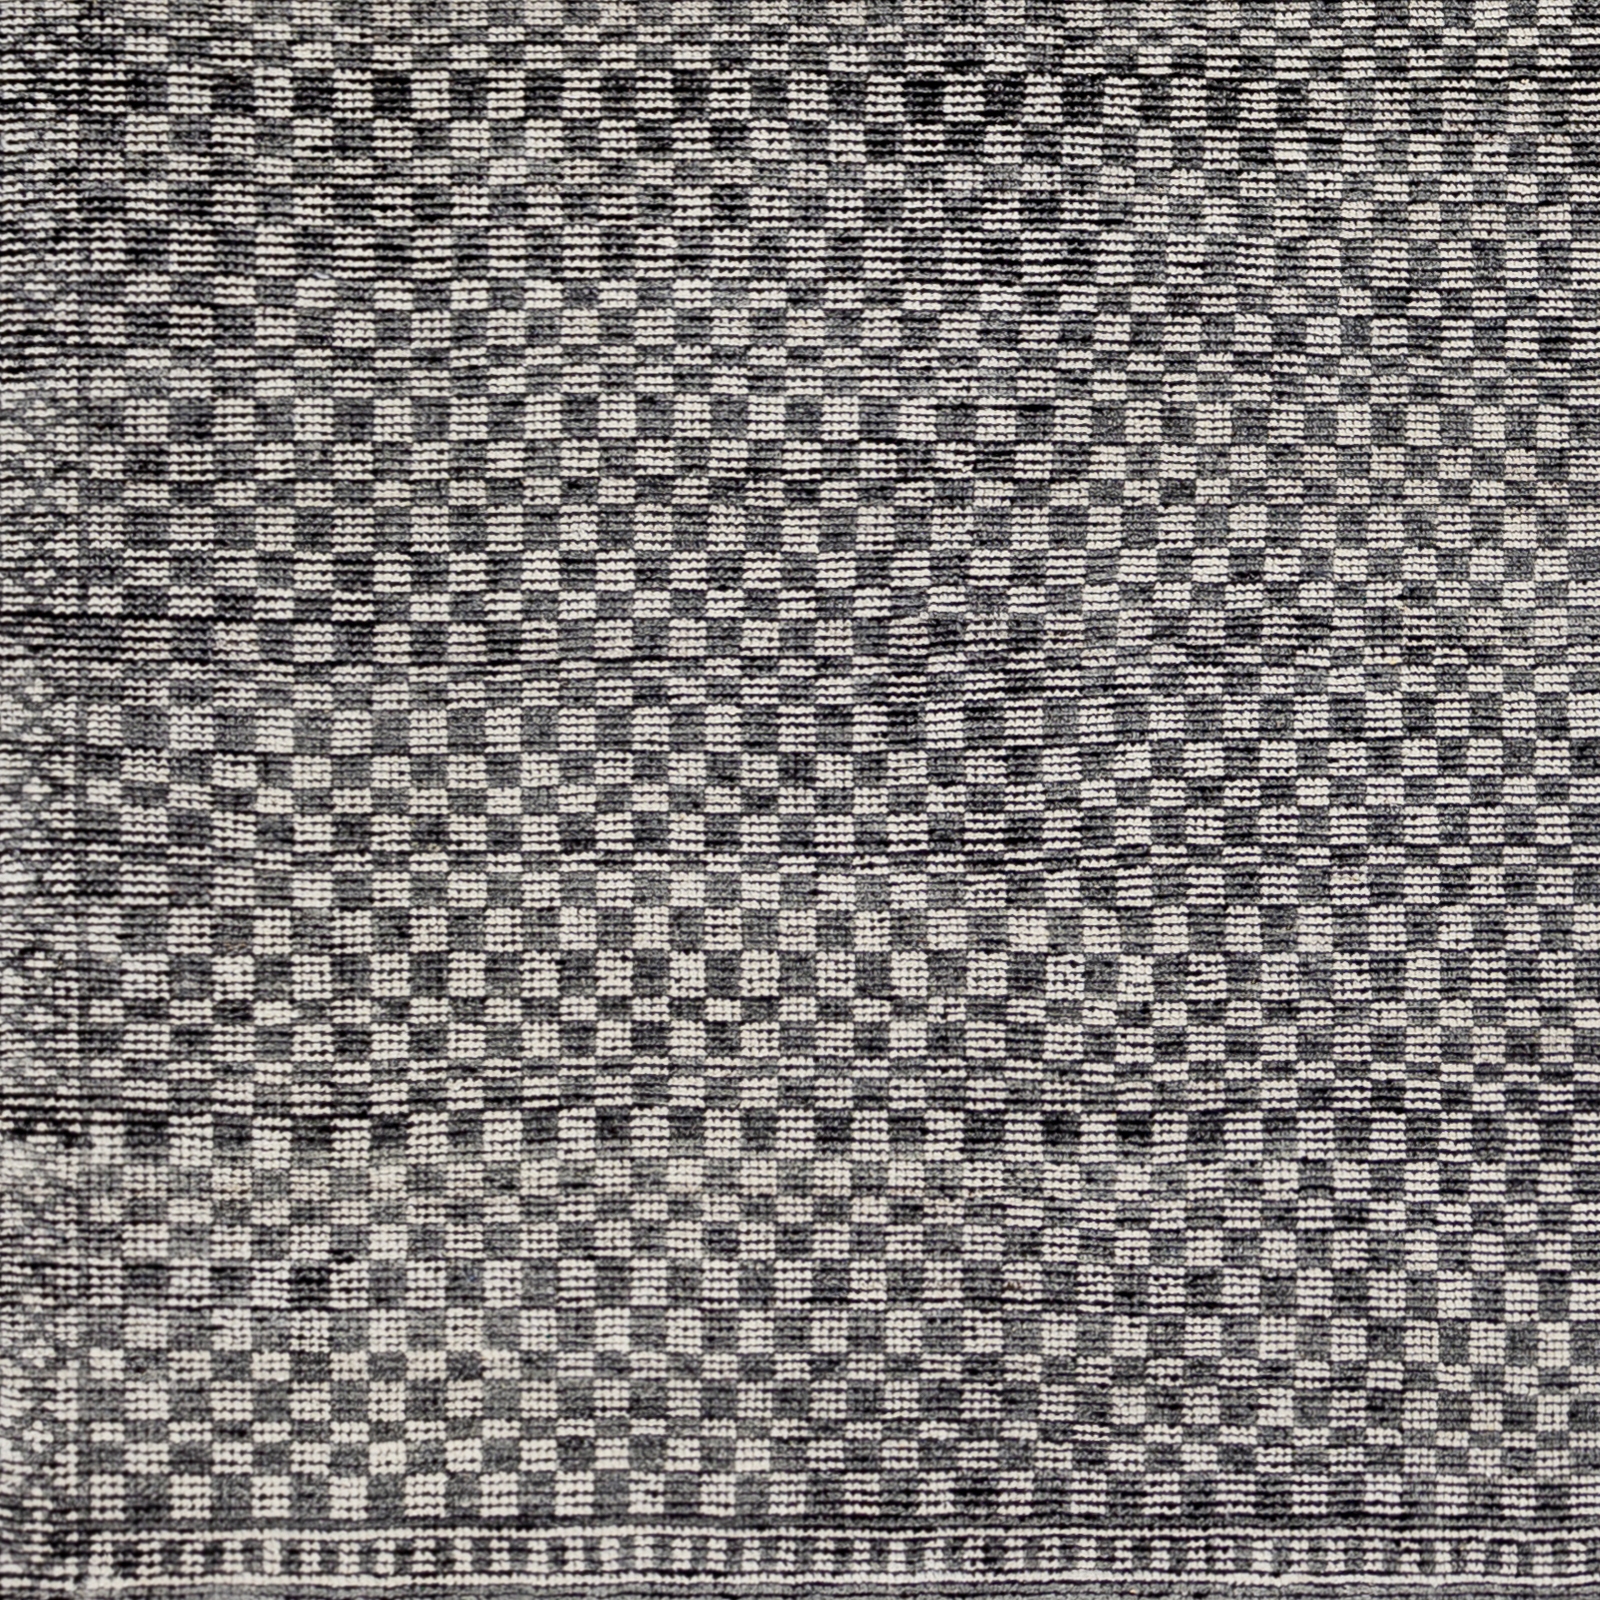 Malaga Rug, 6' x 9' - Image 3